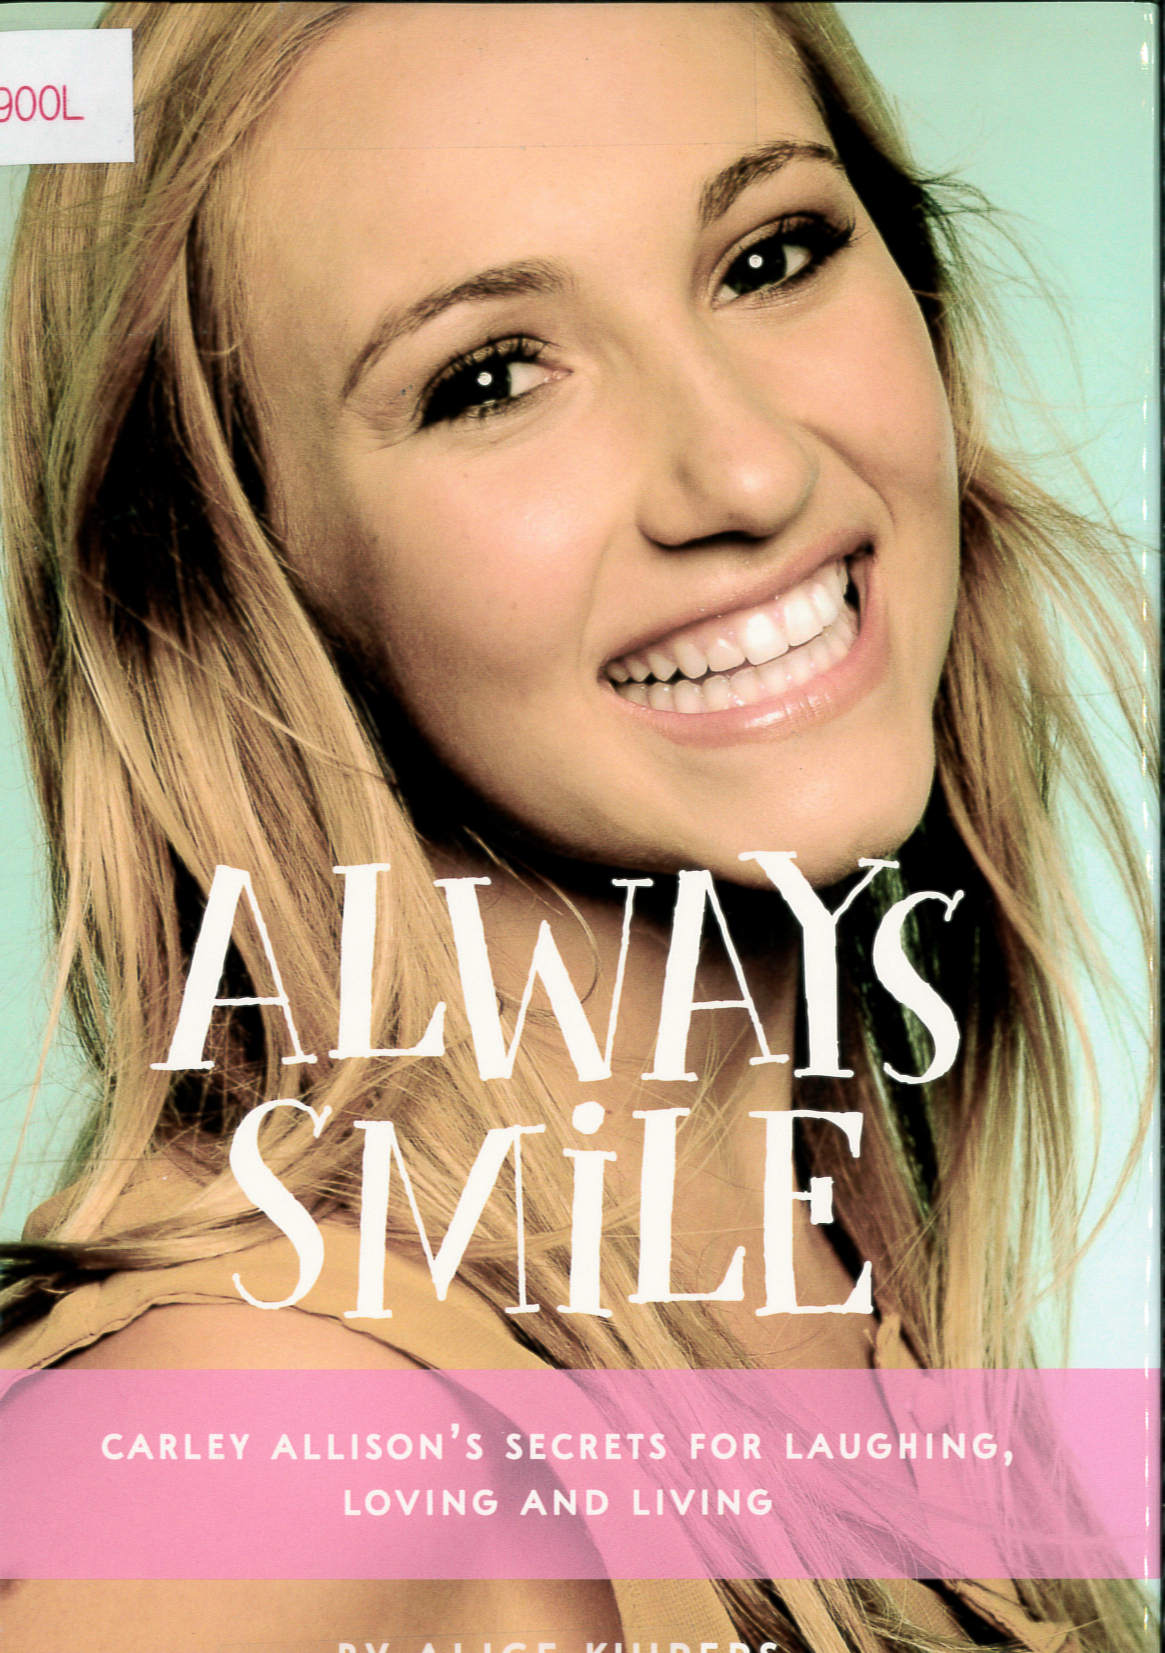 Always smile : Carley Allison